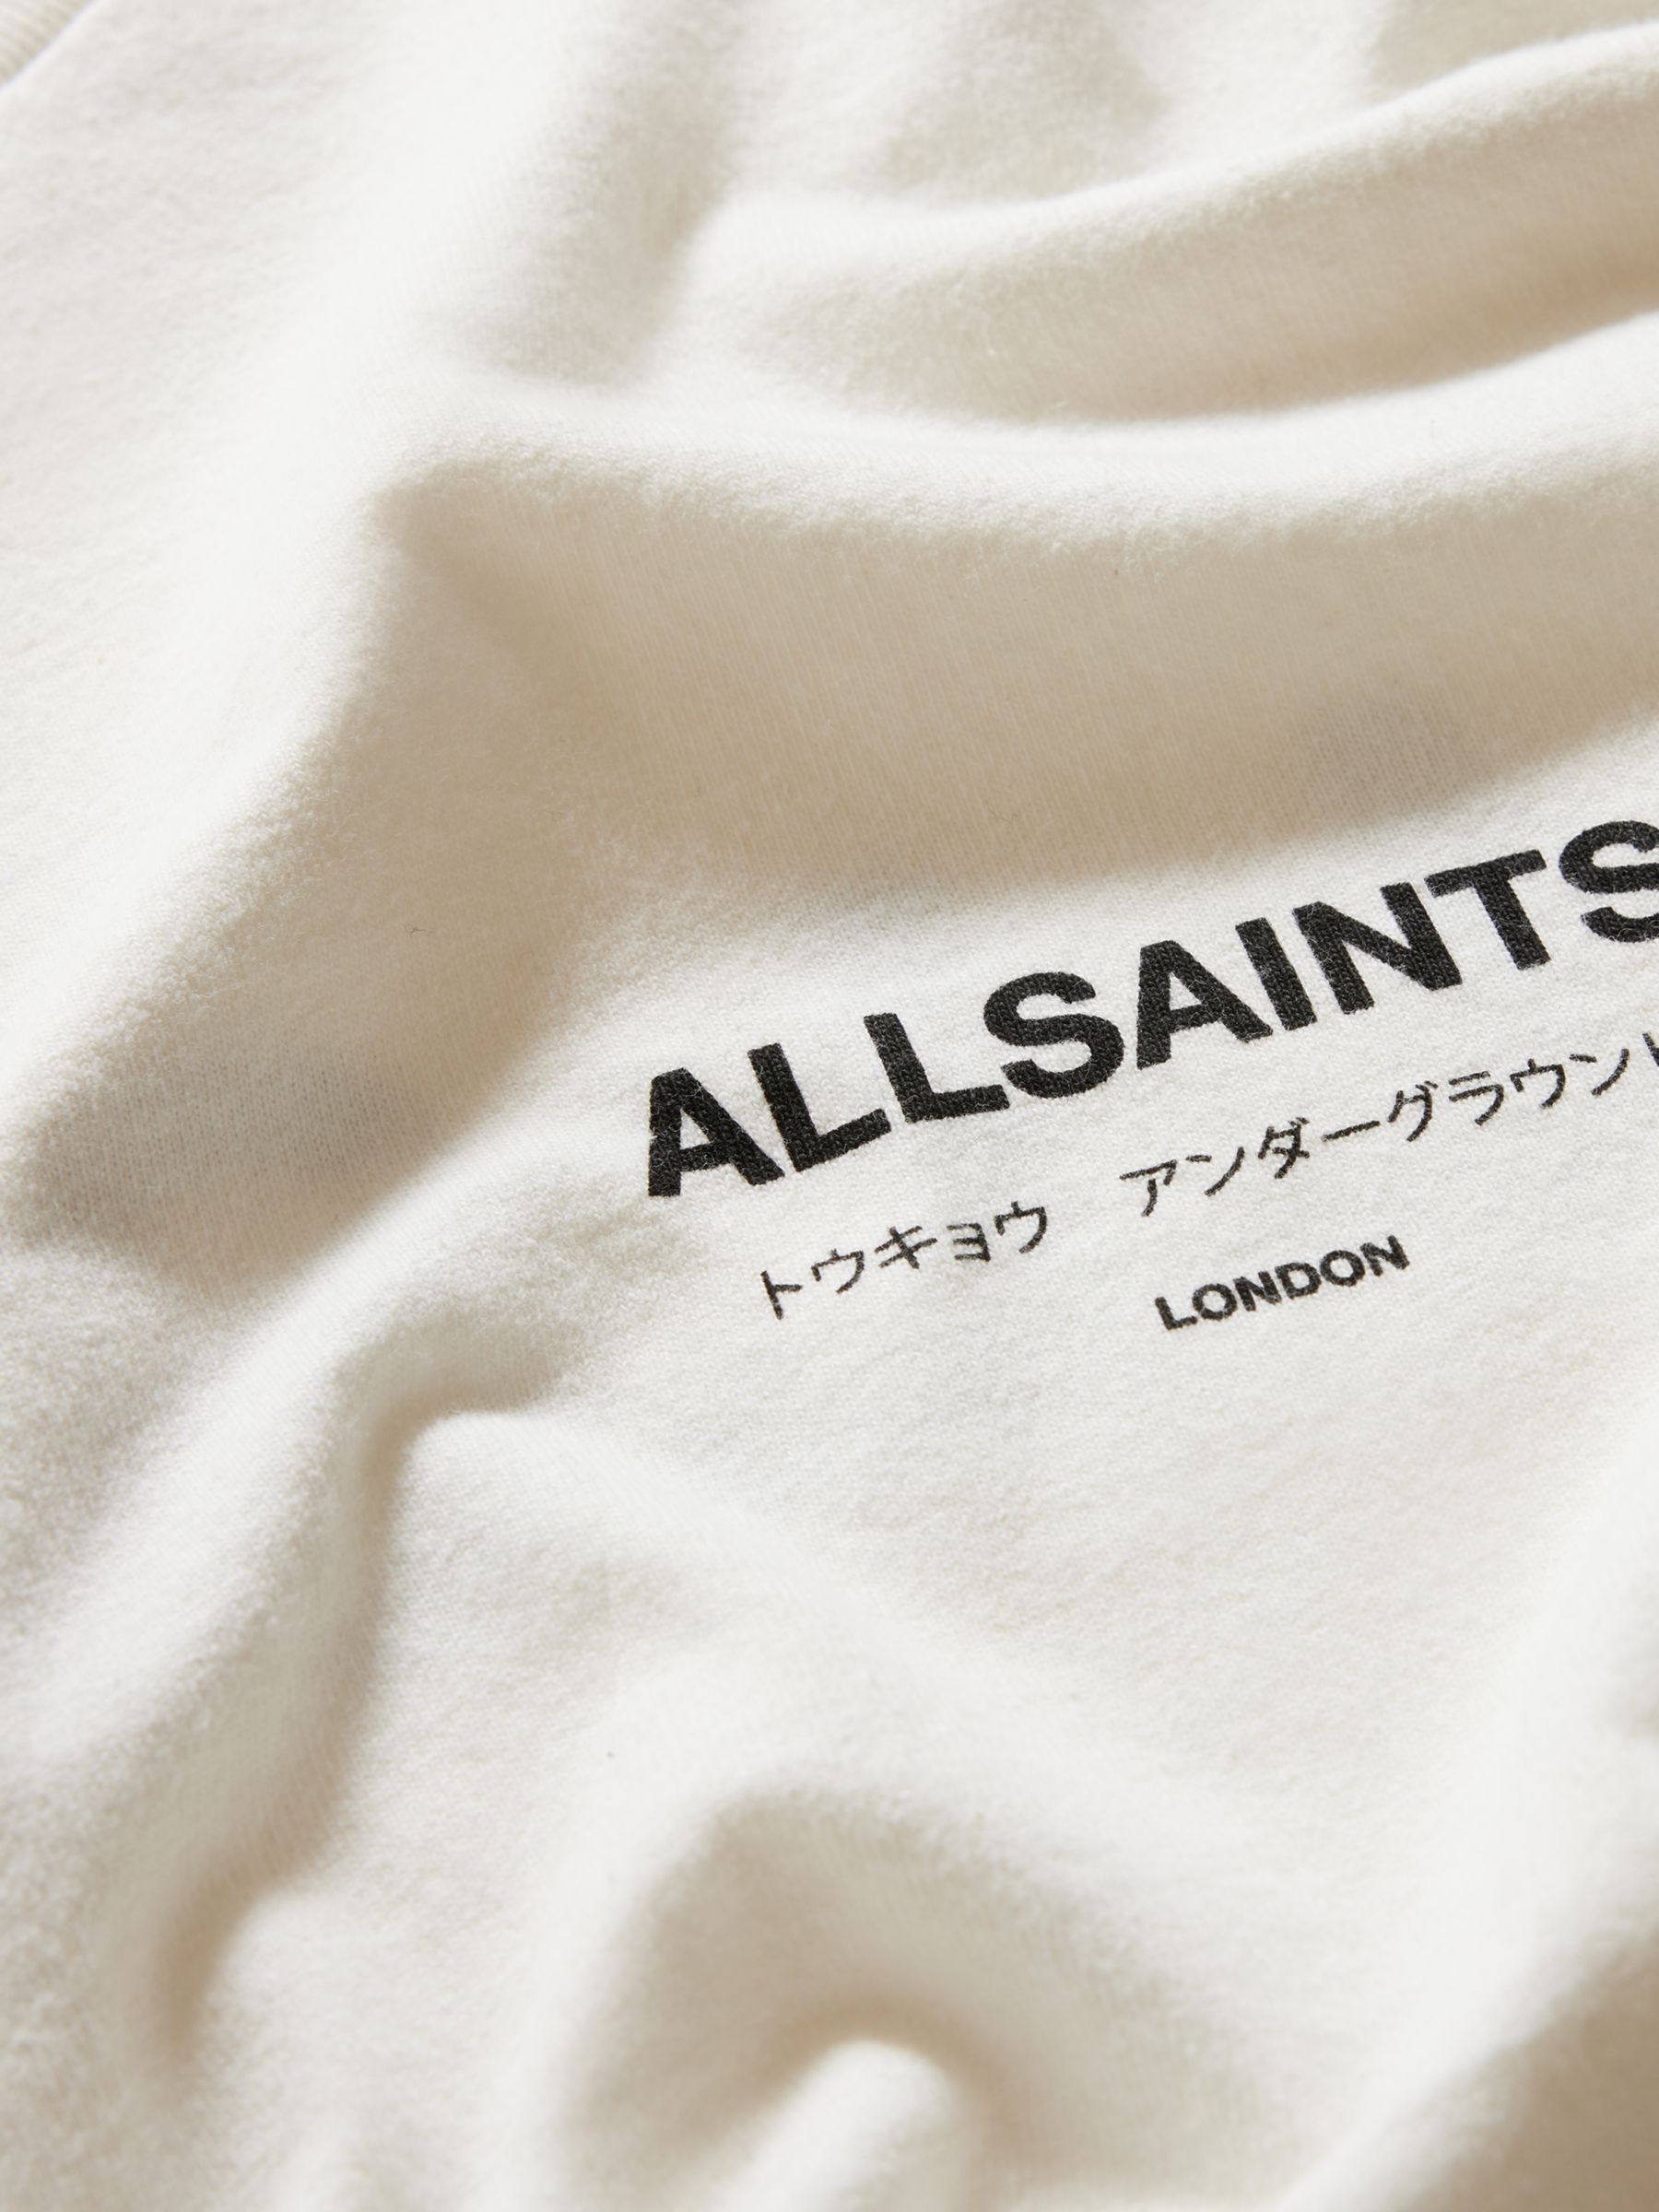 AllSaints Underground T-Shirt, Ashen White, L